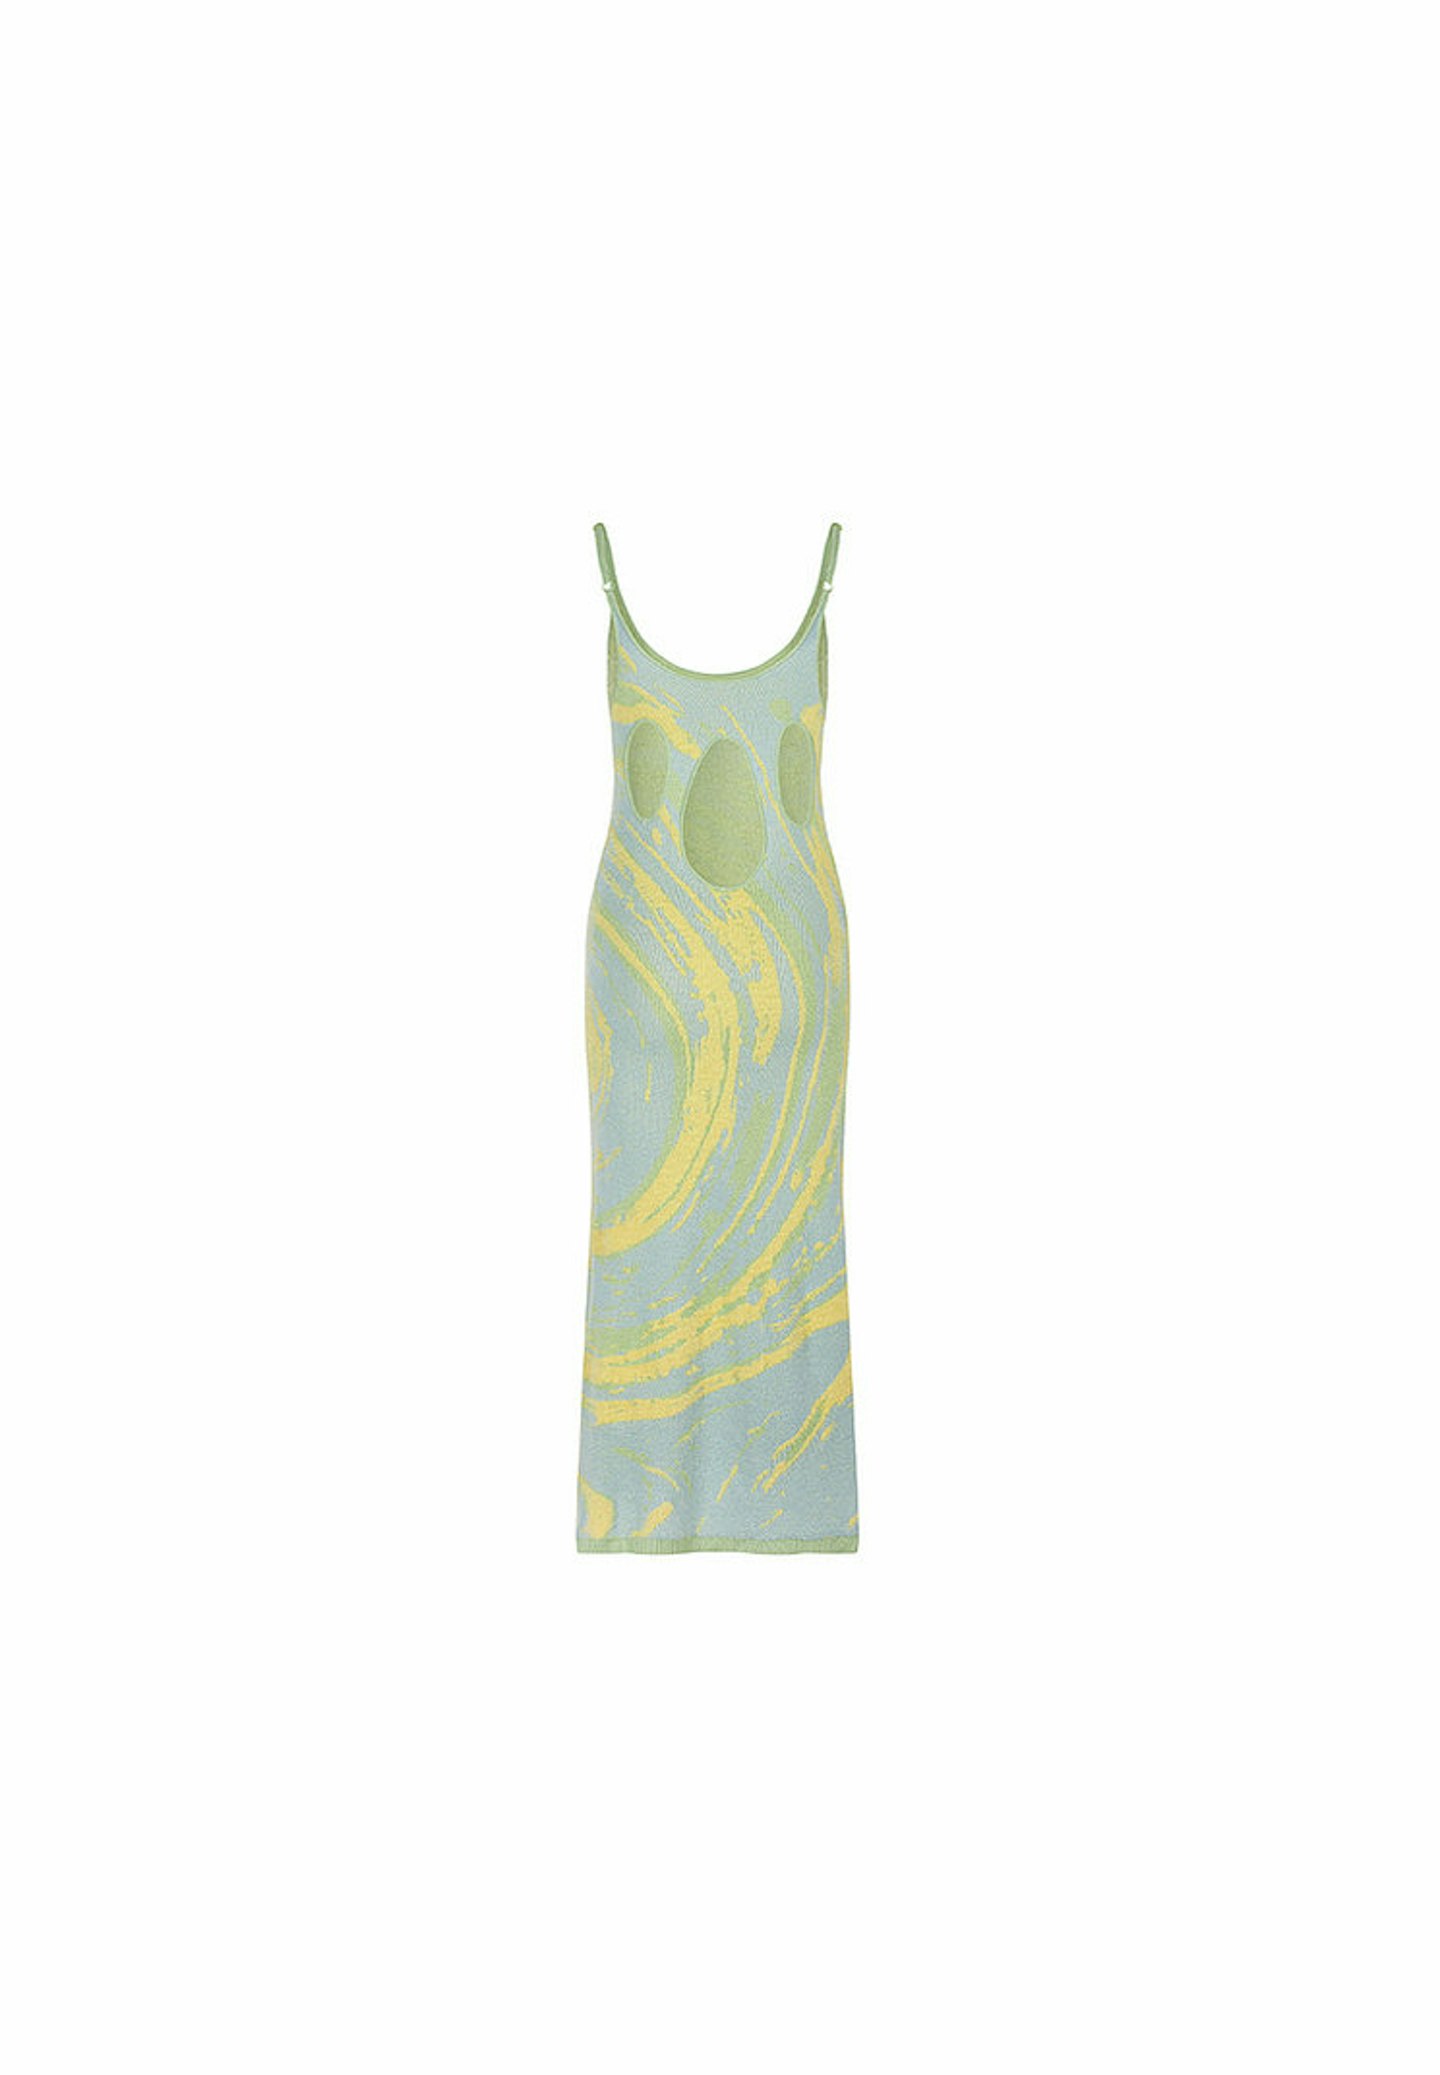 House of Sunny, Cypress Hockney Dress, £91.80